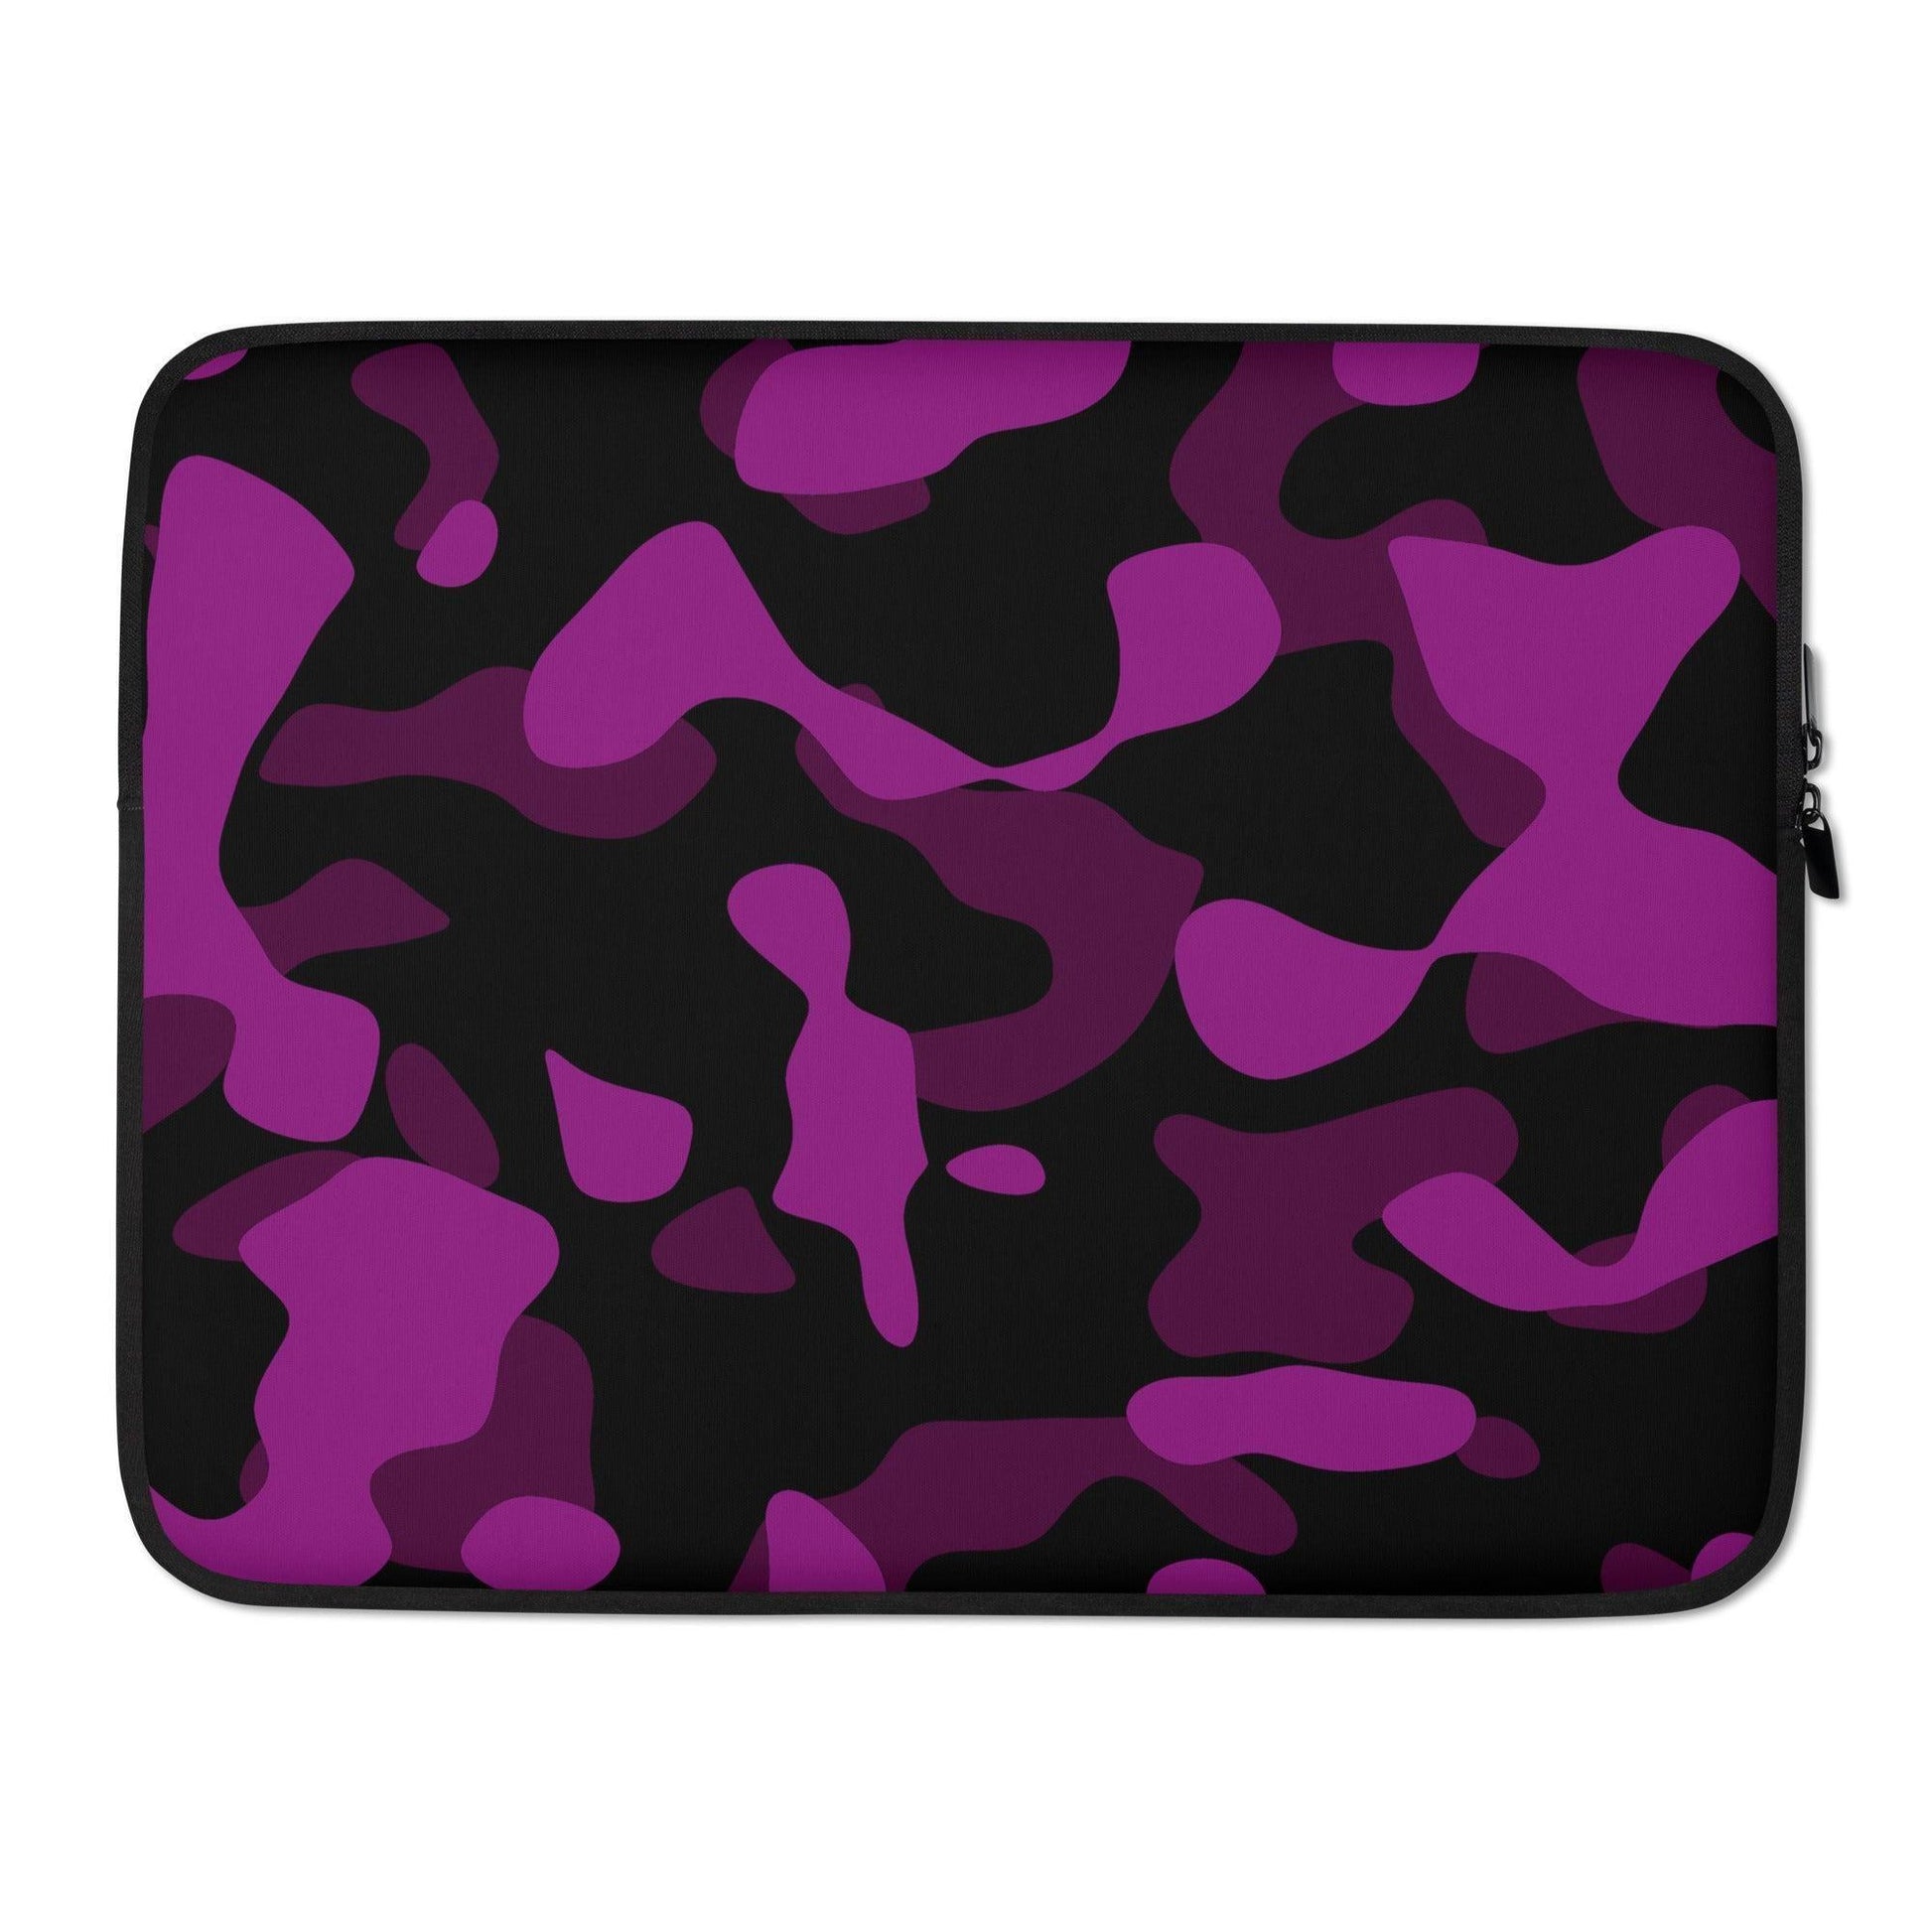 Black Violet Camouflage Laptoptasche -- Black Violet Camouflage Laptoptasche - undefined Laptoptasche | JLR Design